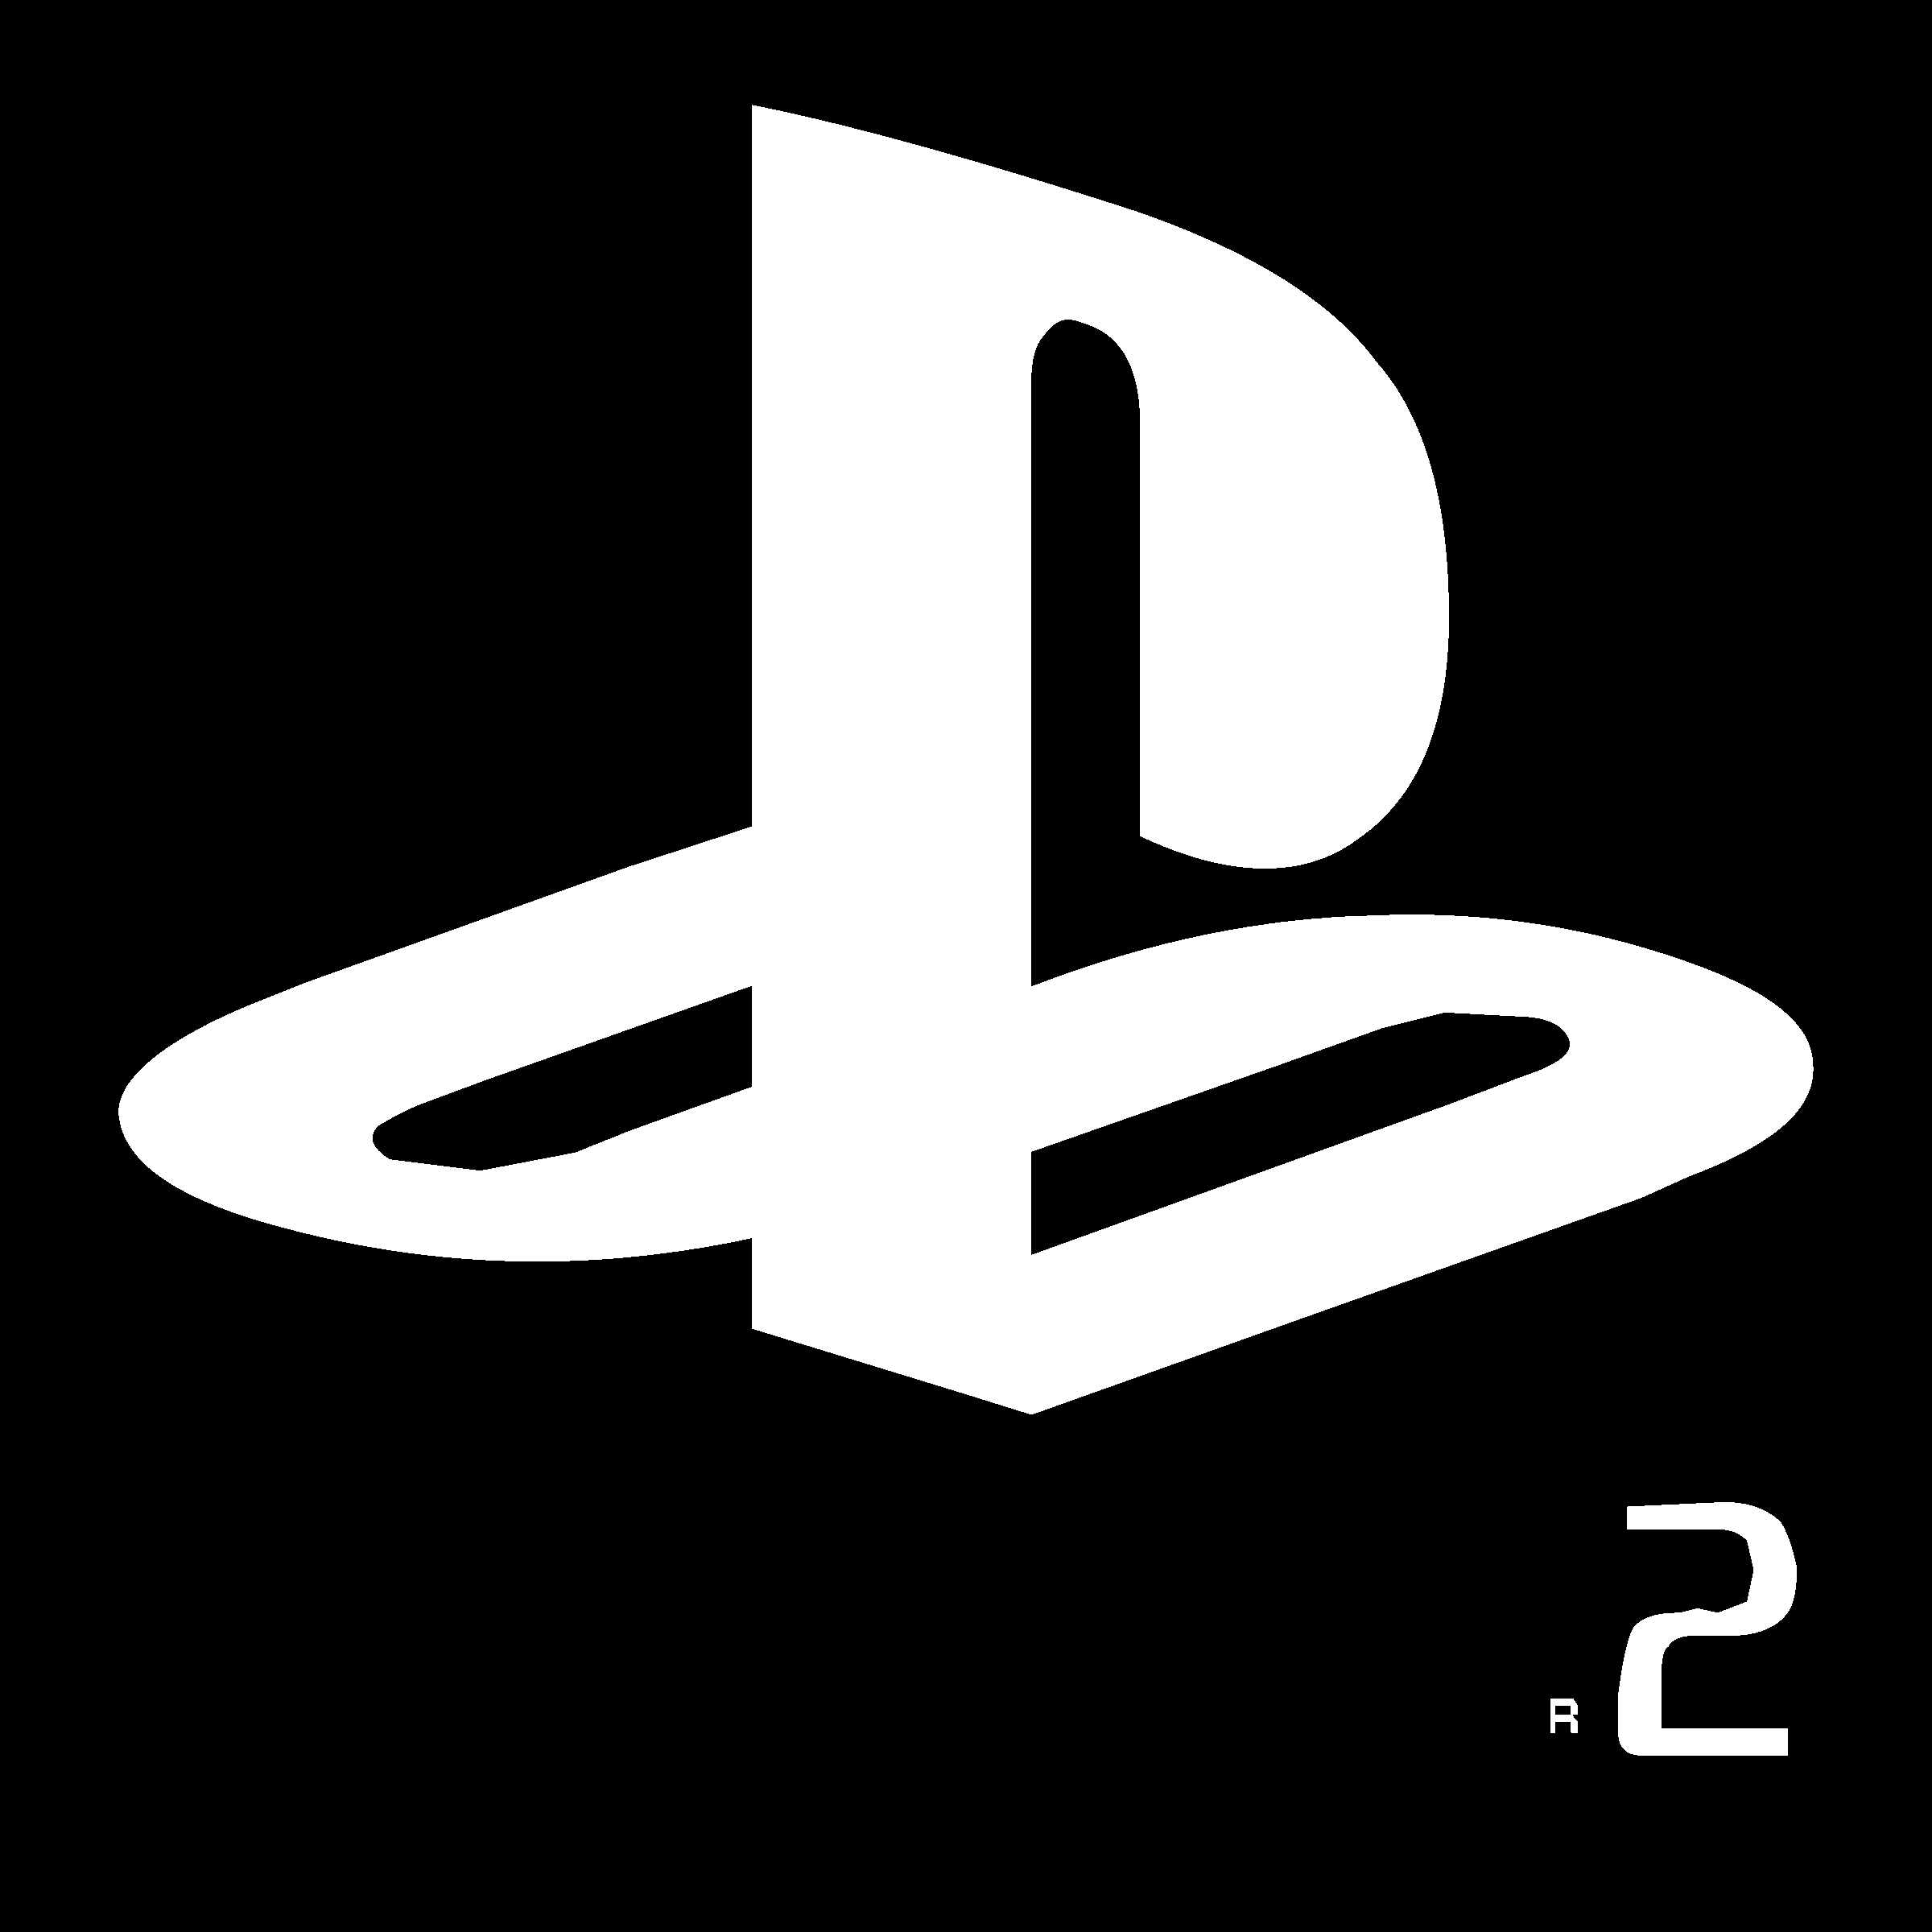 PlayStation 2 Logo - PlayStation Logo PNG Transparent & SVG Vector - Freebie Supply